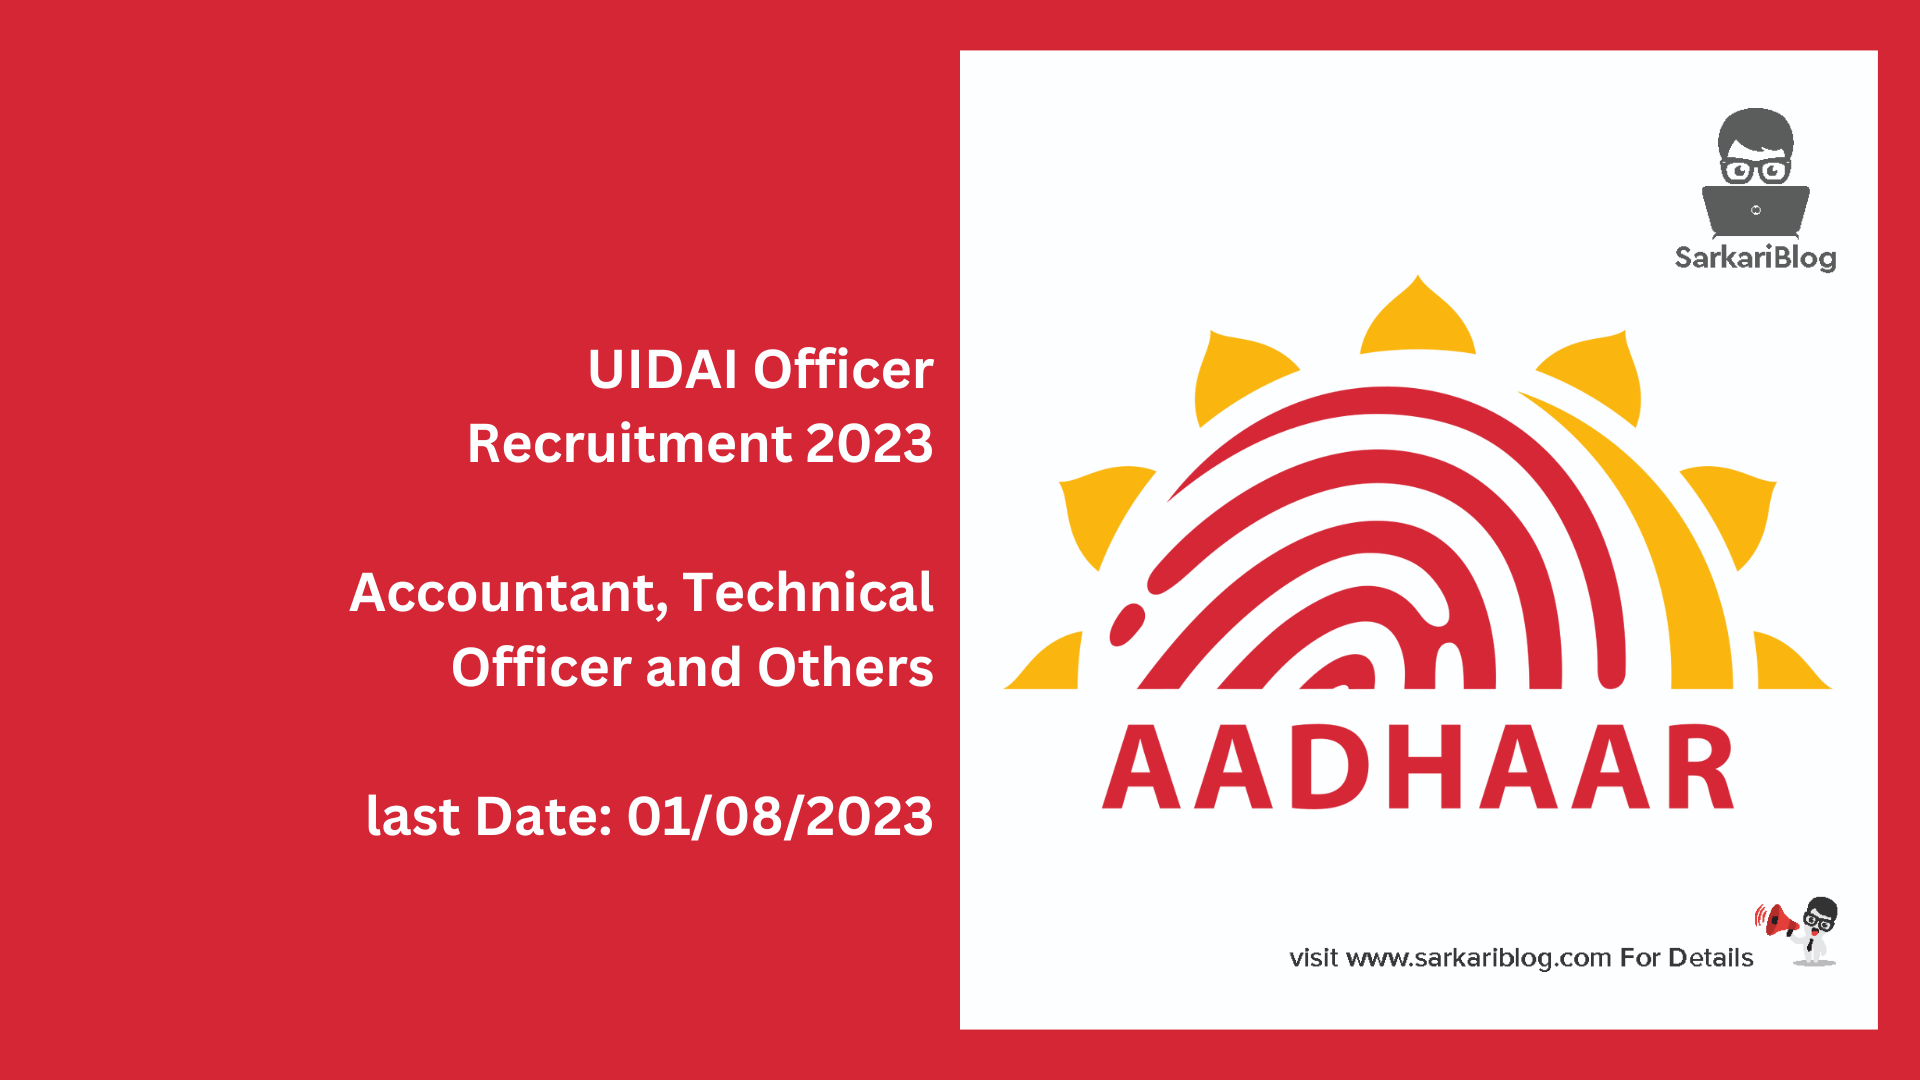 UIDAI Officer Recruitment 2023